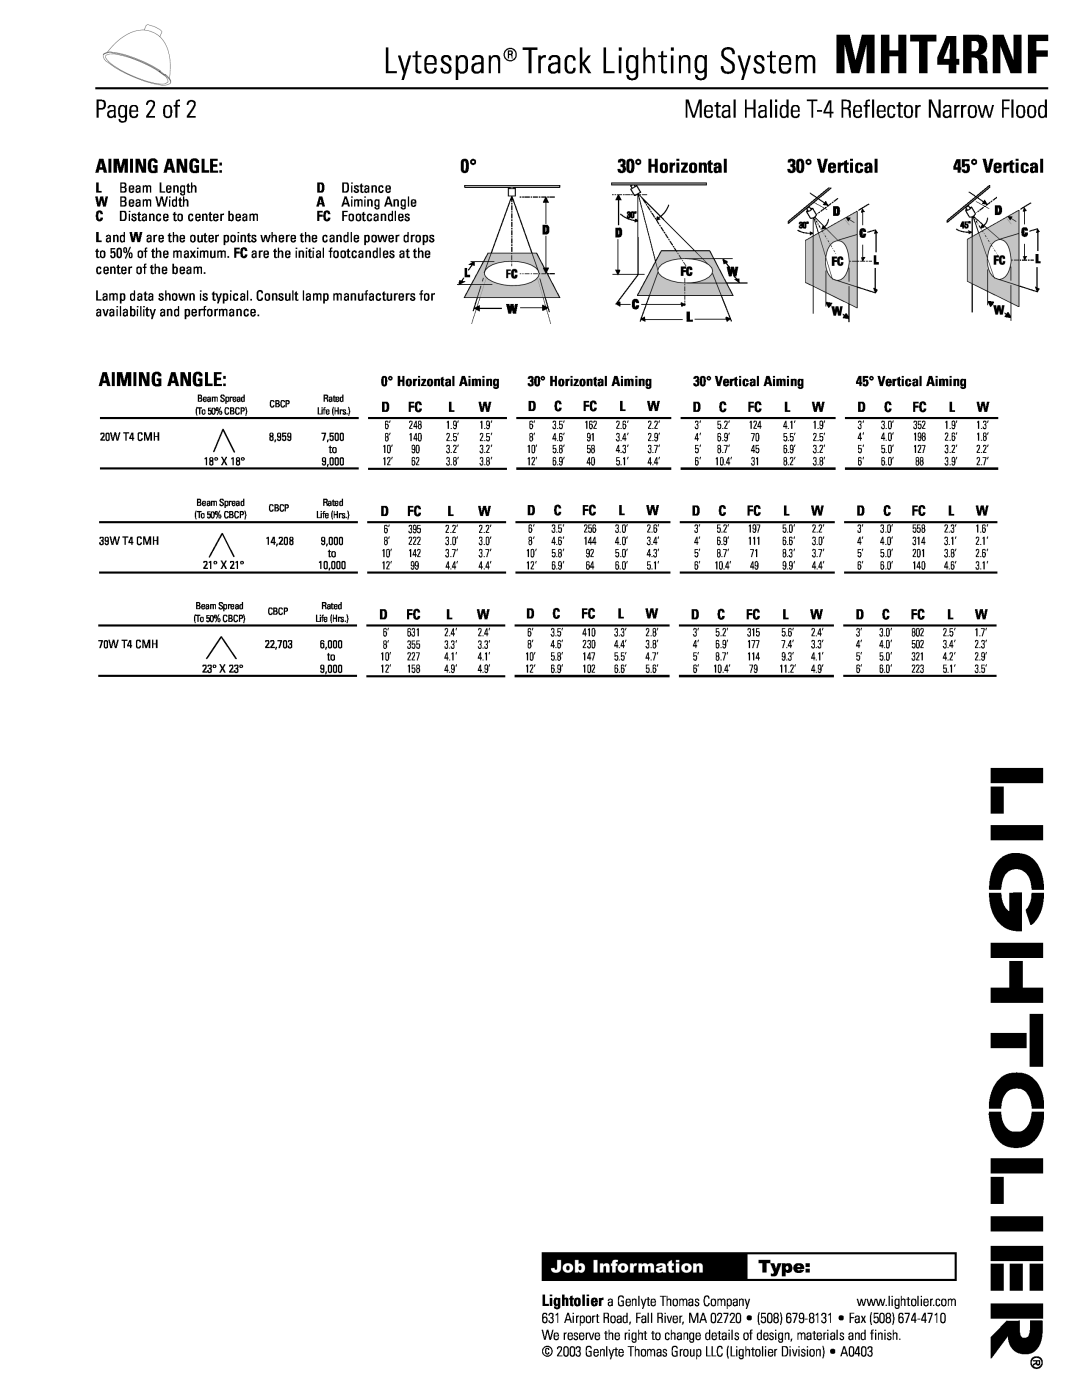 Lightolier MHT4RNF Metal Halide T-4Reflector Narrow Flood, Aiming Angle, Horizontal, Vertical, Page 2 of, Job Information 